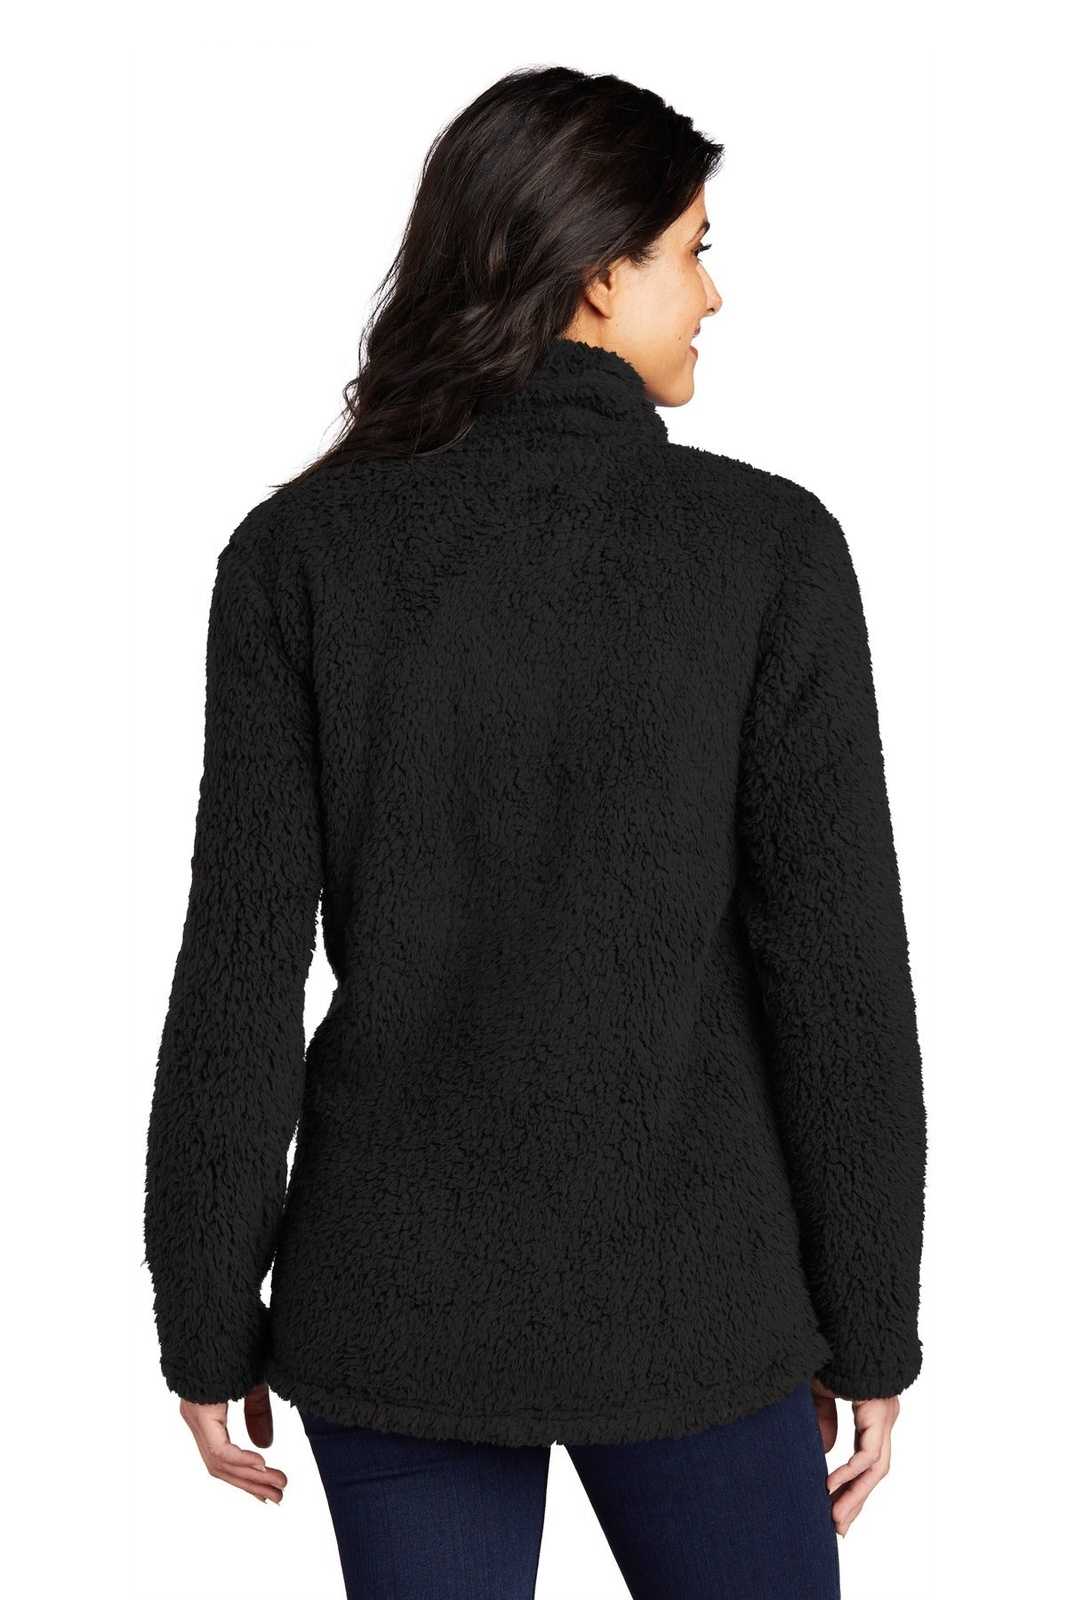 Port Authority L130 Ladies Cozy 1/4-Zip Fleece - Black - HIT a Double - 1